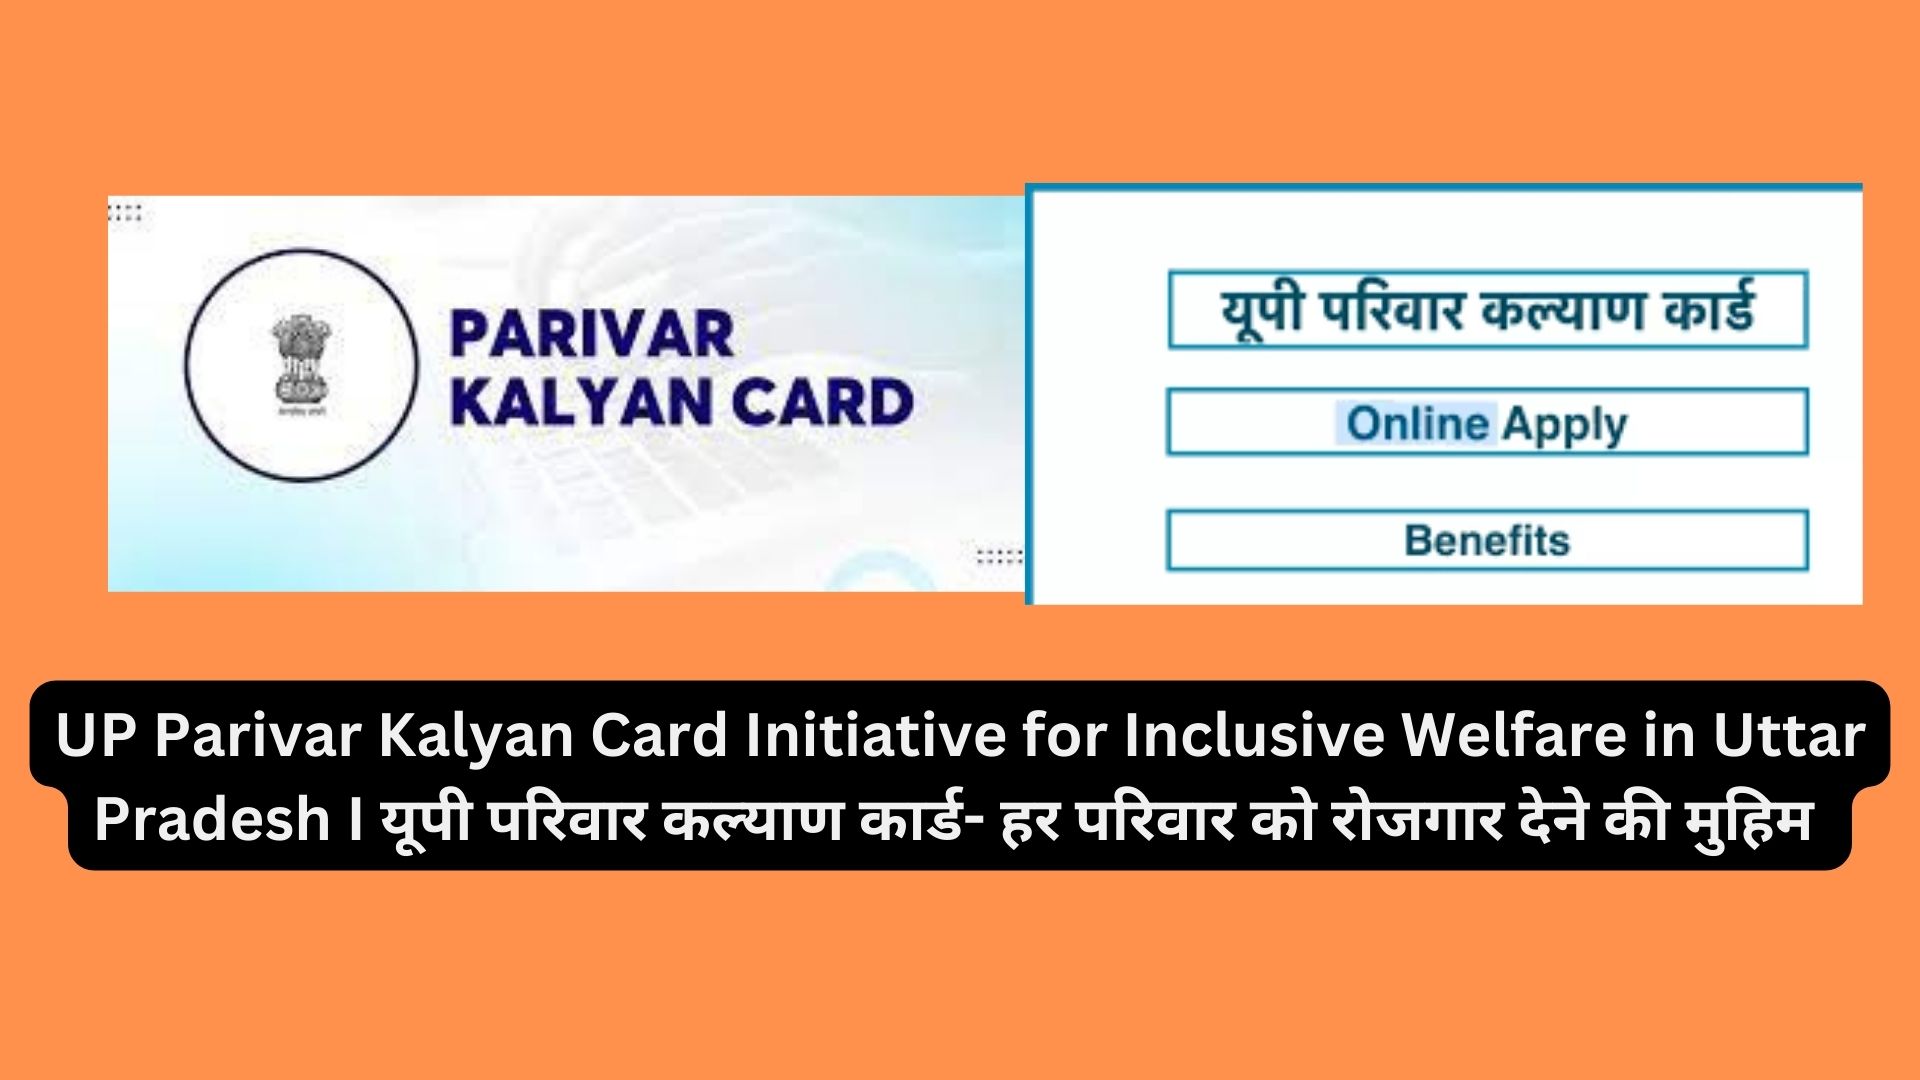 UP Parivar Kalyan Card Initiative for Inclusive Welfare in Uttar Pradesh I यूपी परिवार कल्याण कार्ड- हर परिवार को रोजगार देने की मुहिम